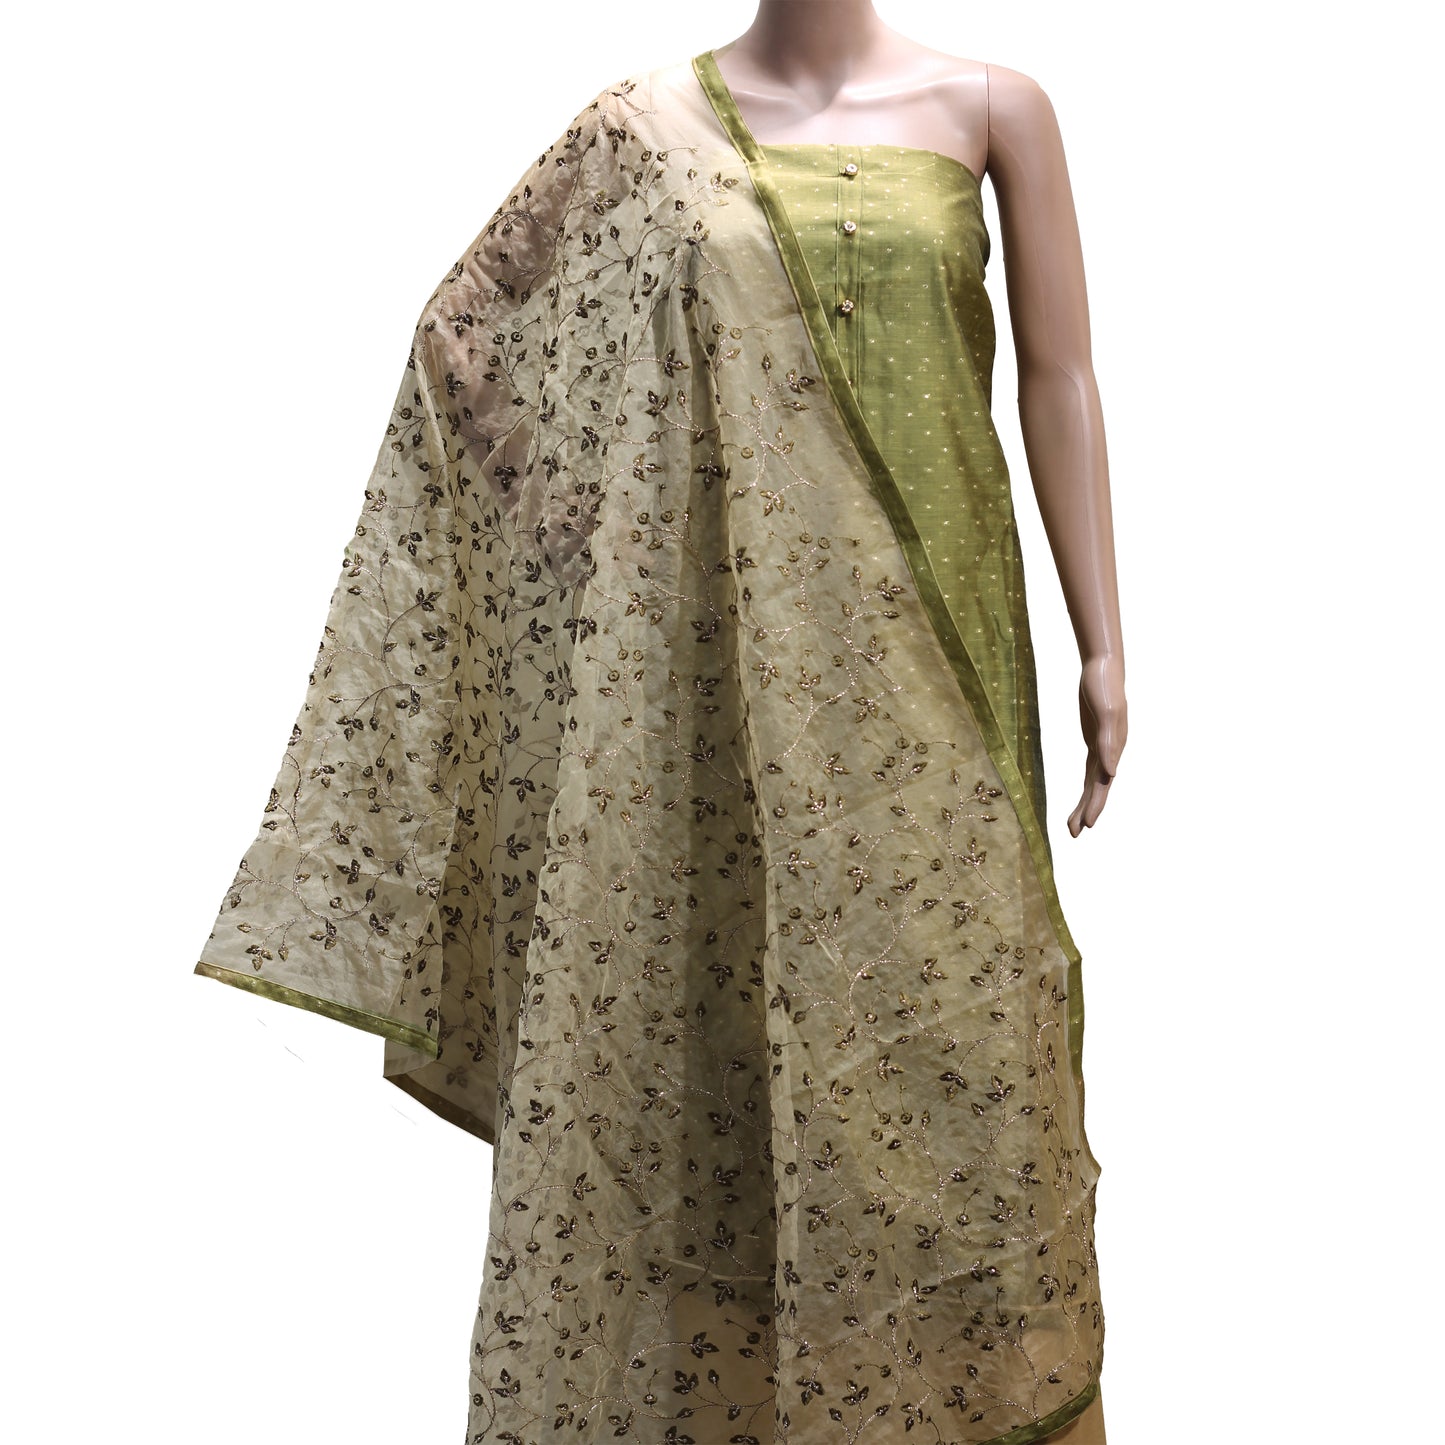 Green Chanderi Silk Party Wear Dress Material